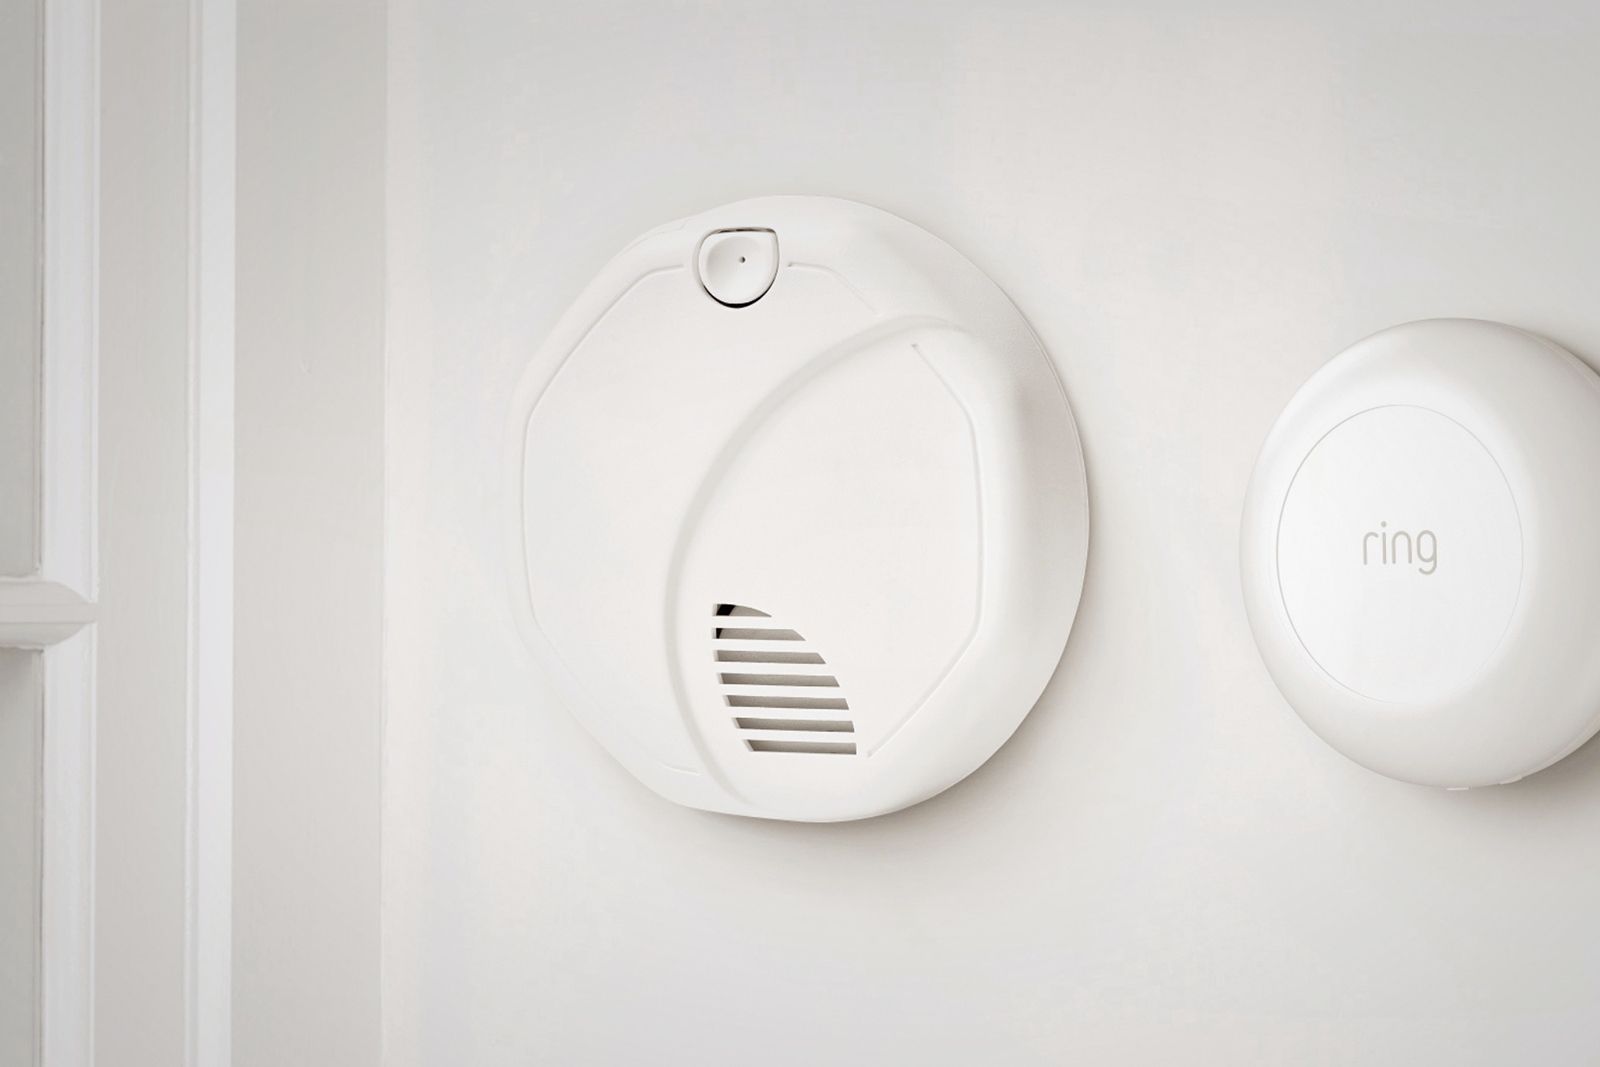 Ring unveils Door View Cam smart lighting system and new Alarm sensors image 3